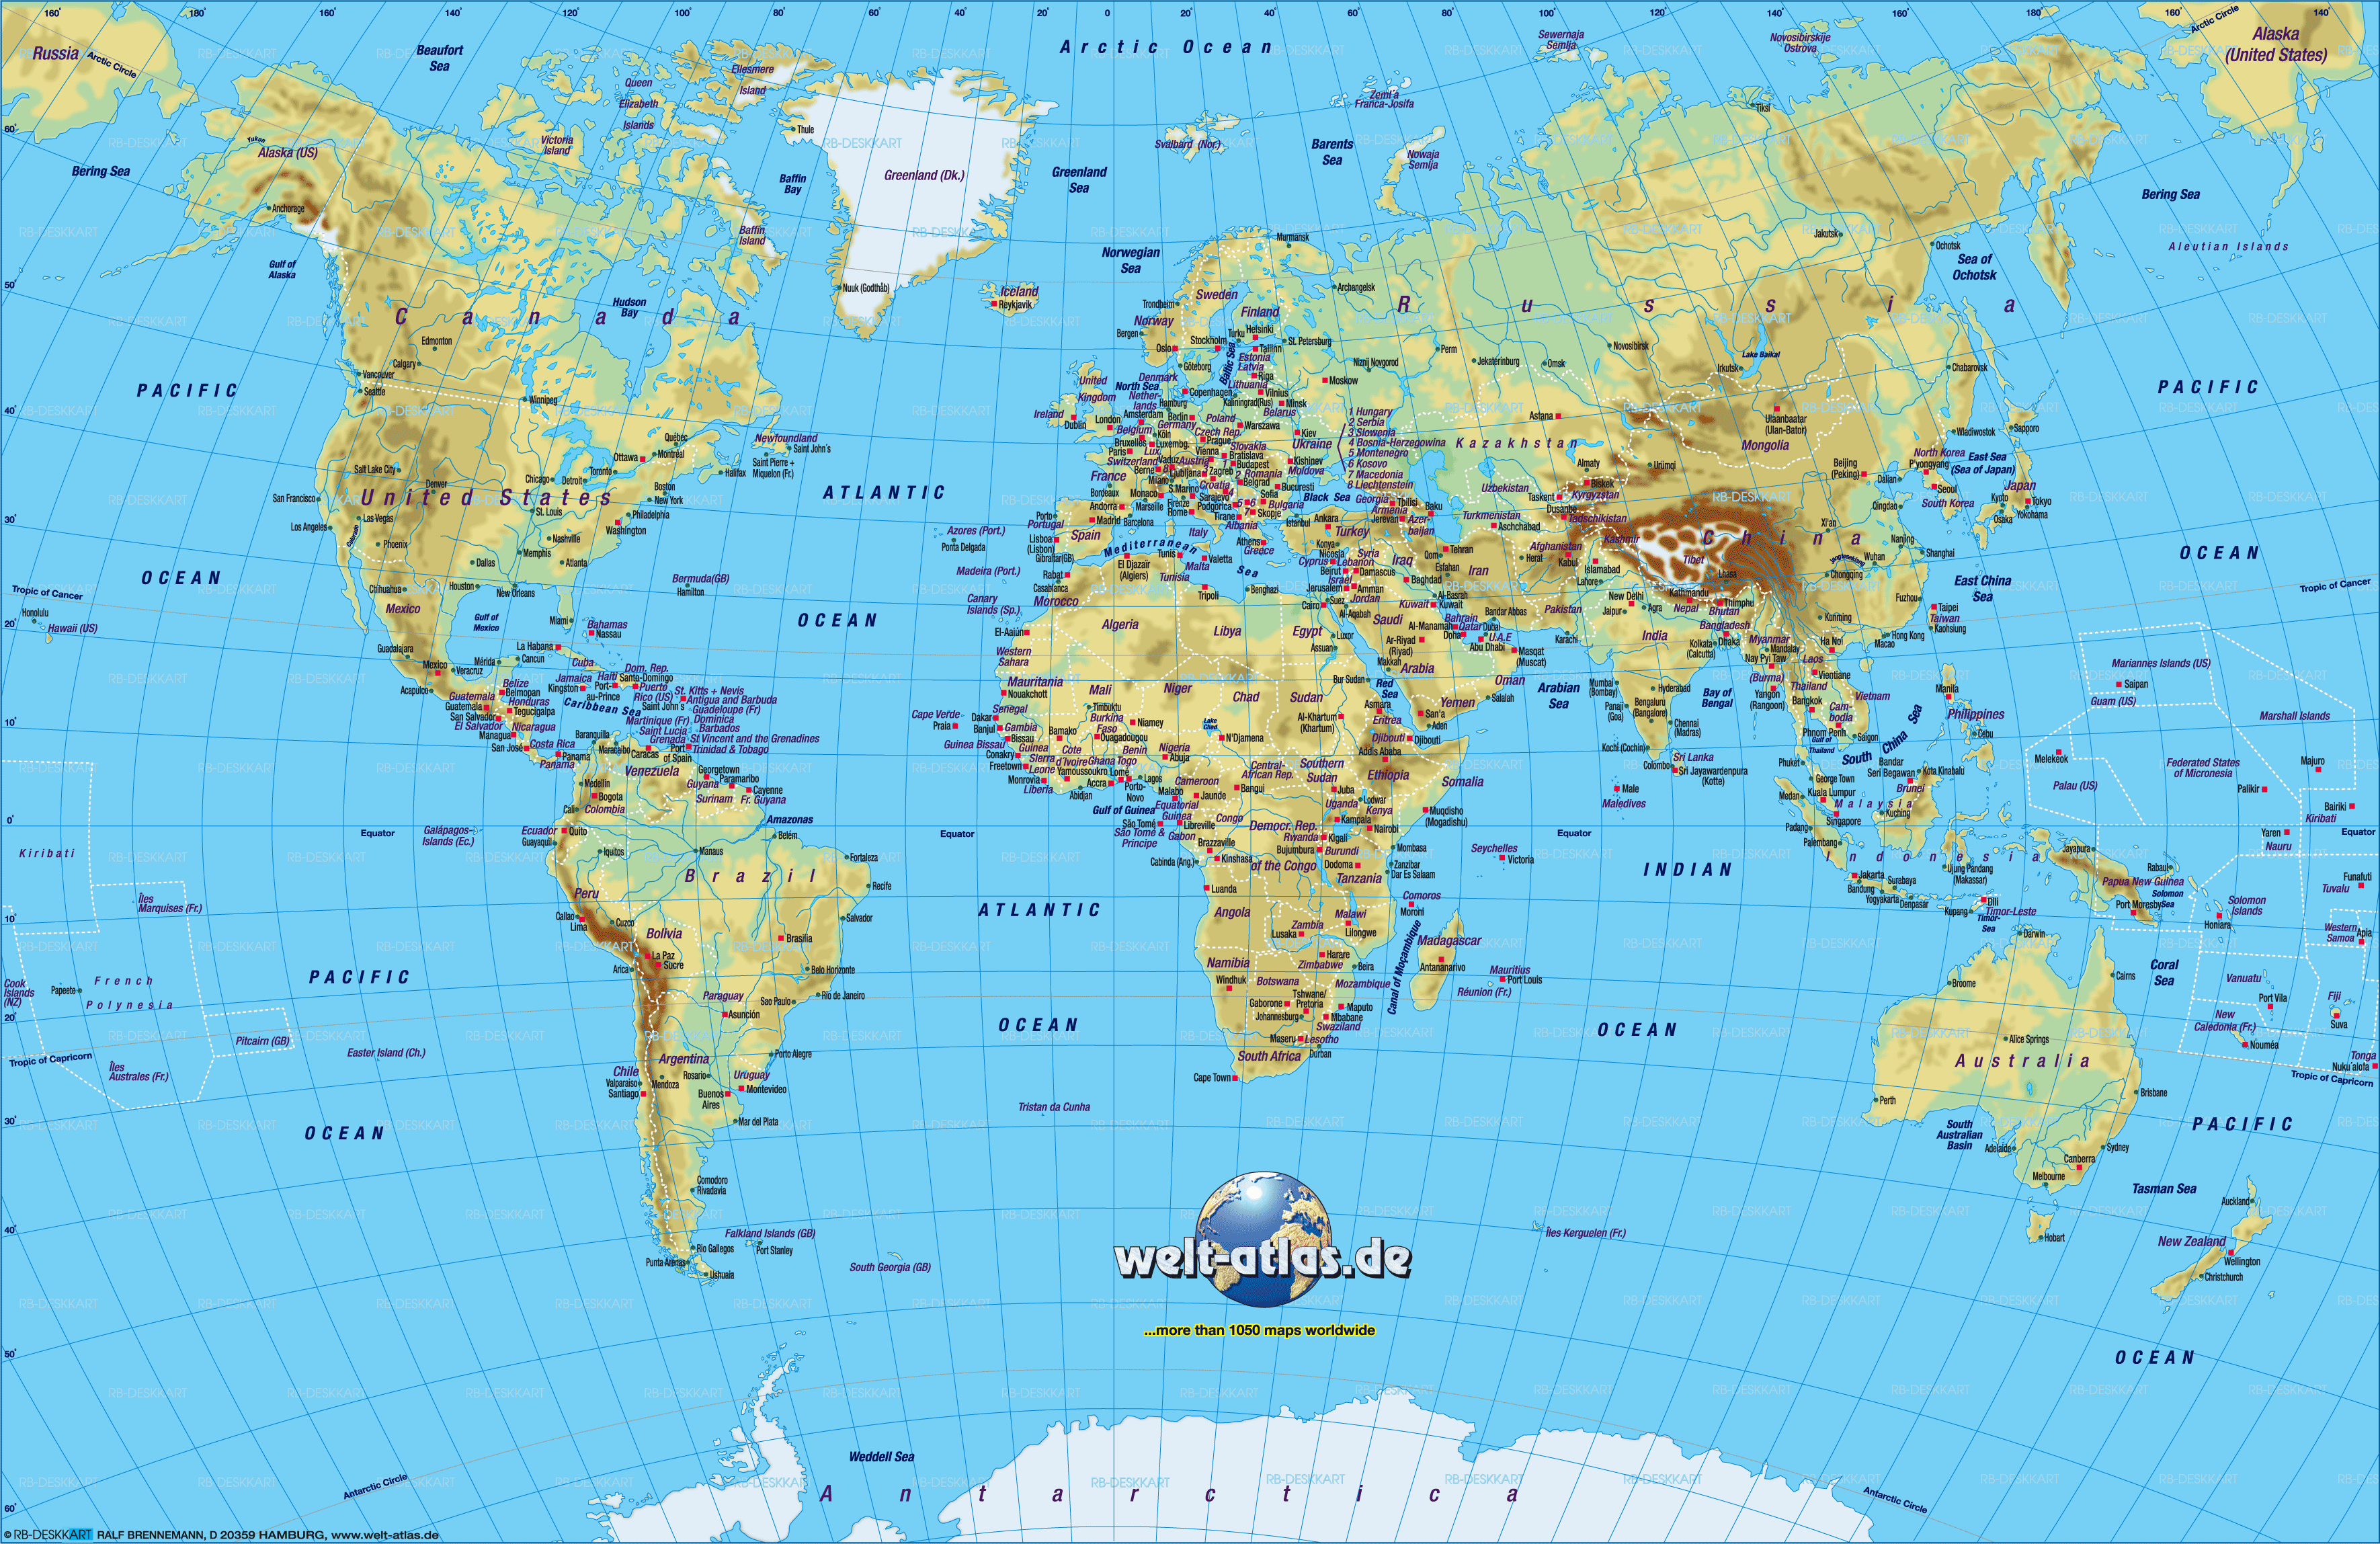 Atlantic Map World Atlas - ToursMaps.com